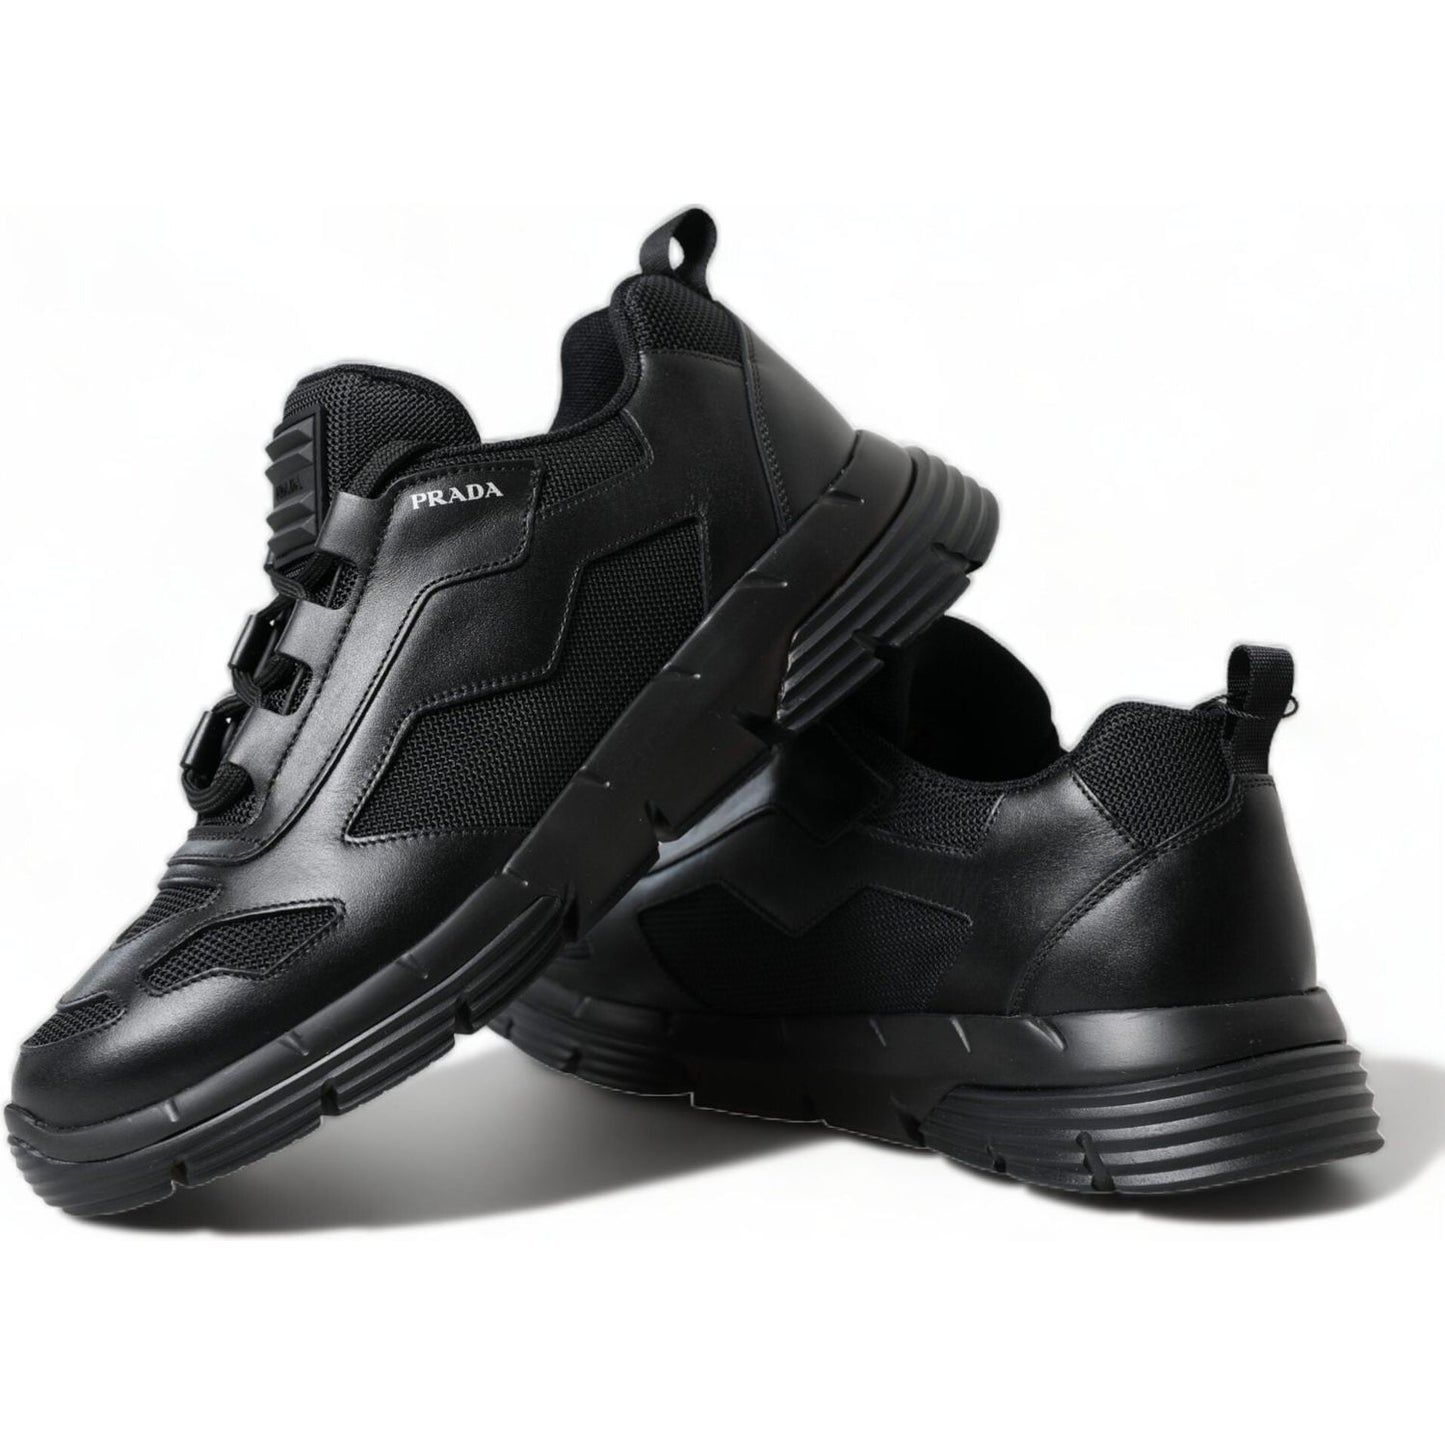 Prada Sleek Low Top Leather Sneakers in Timeless Black black-mesh-panel-low-top-twist-trainers-sneakers-shoes 465A4094-BG-scaled-af25547b-016.jpg